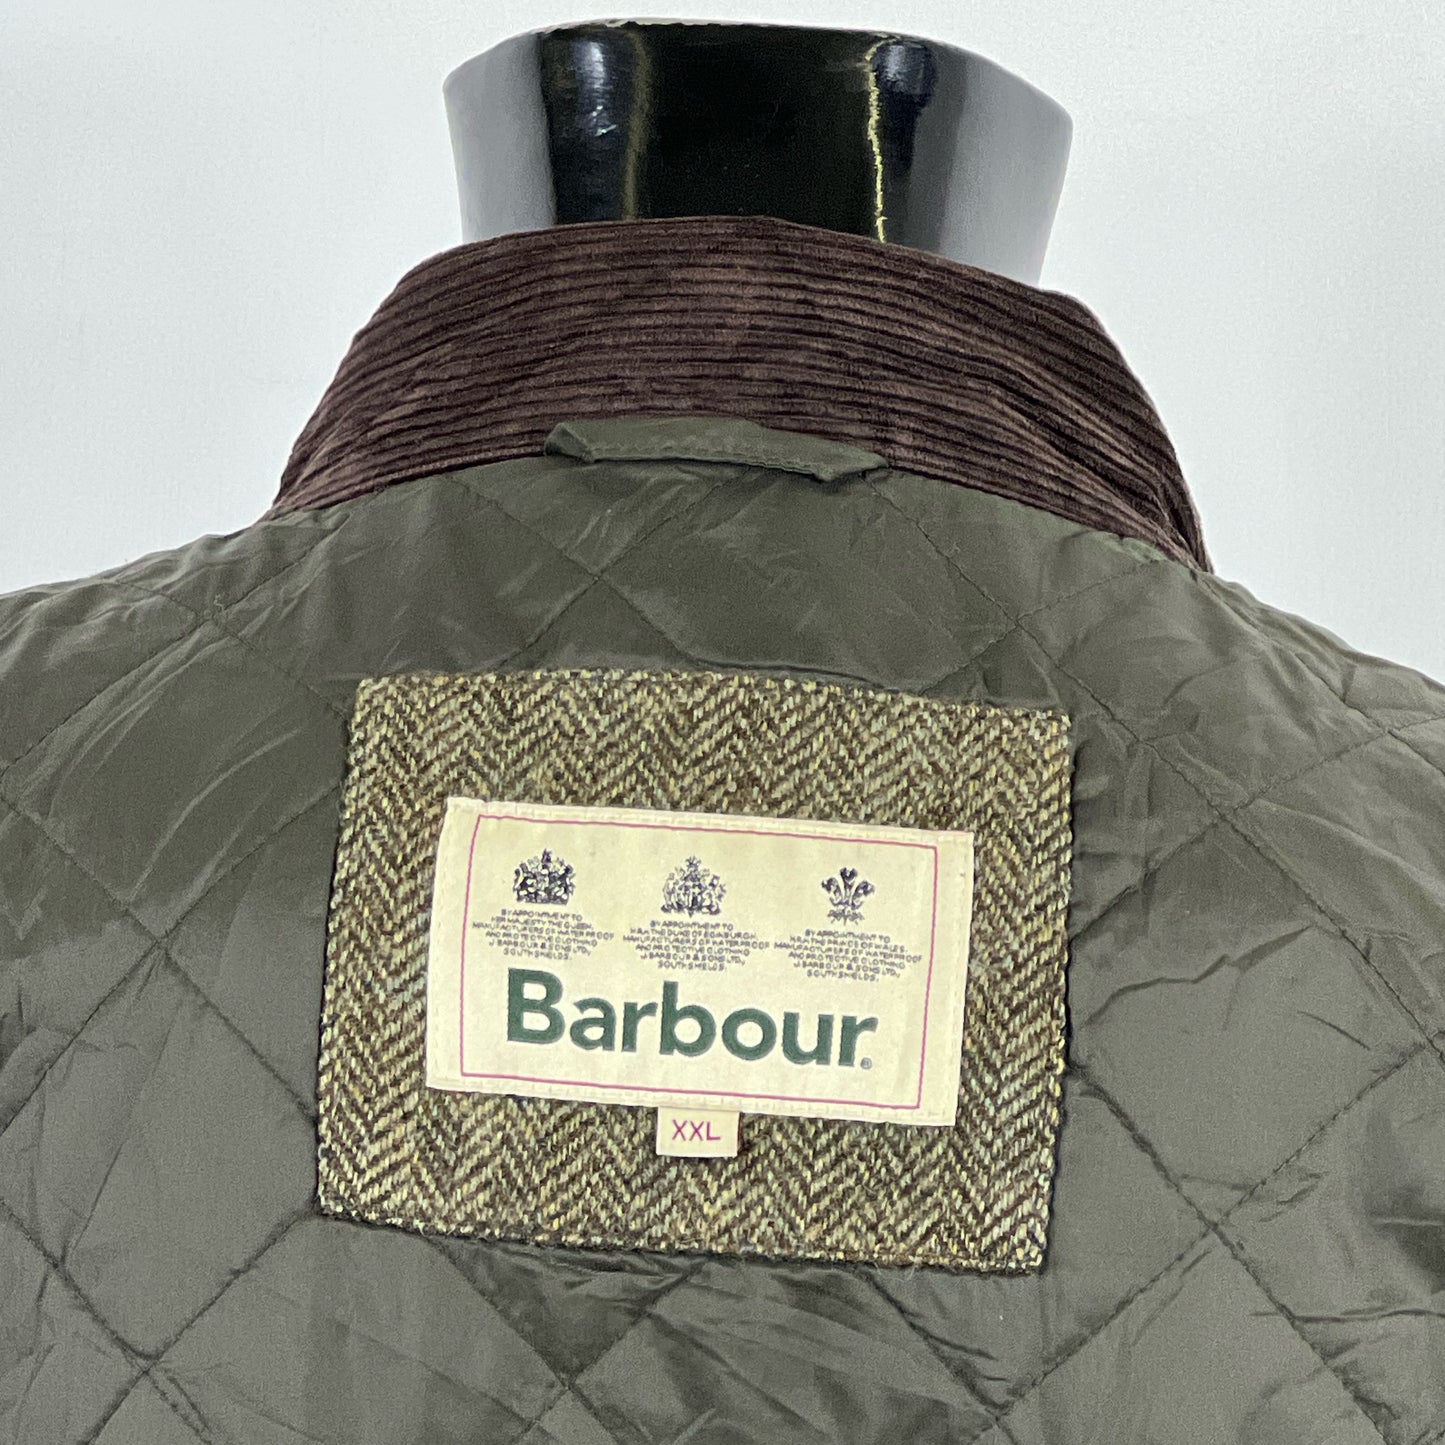 Barbour Giacca uomo verde oliva XXL cerato - Man wax Hereford Olive Jacket size XXL